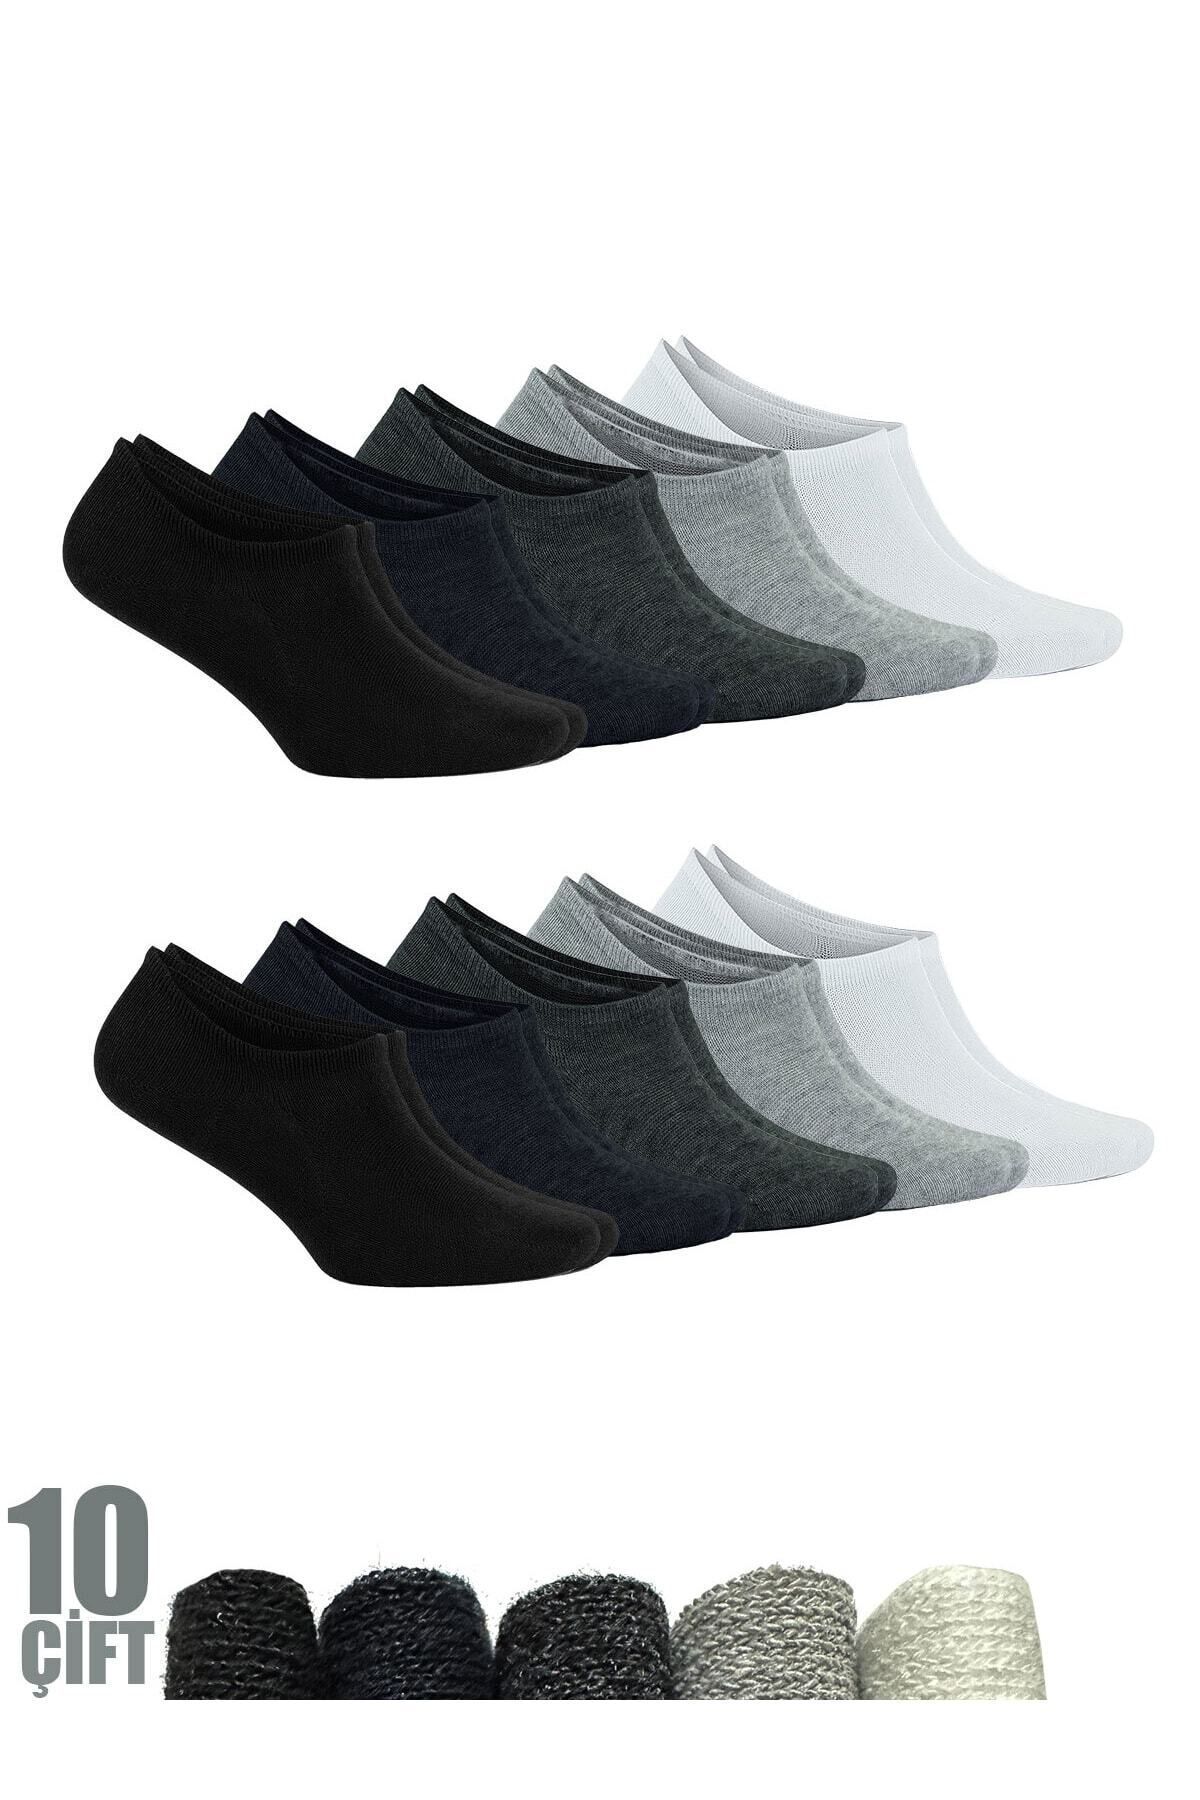 TEET Patik Sneaker Pamuklu Erkek Çorap 10 Çift 40-45 Numara